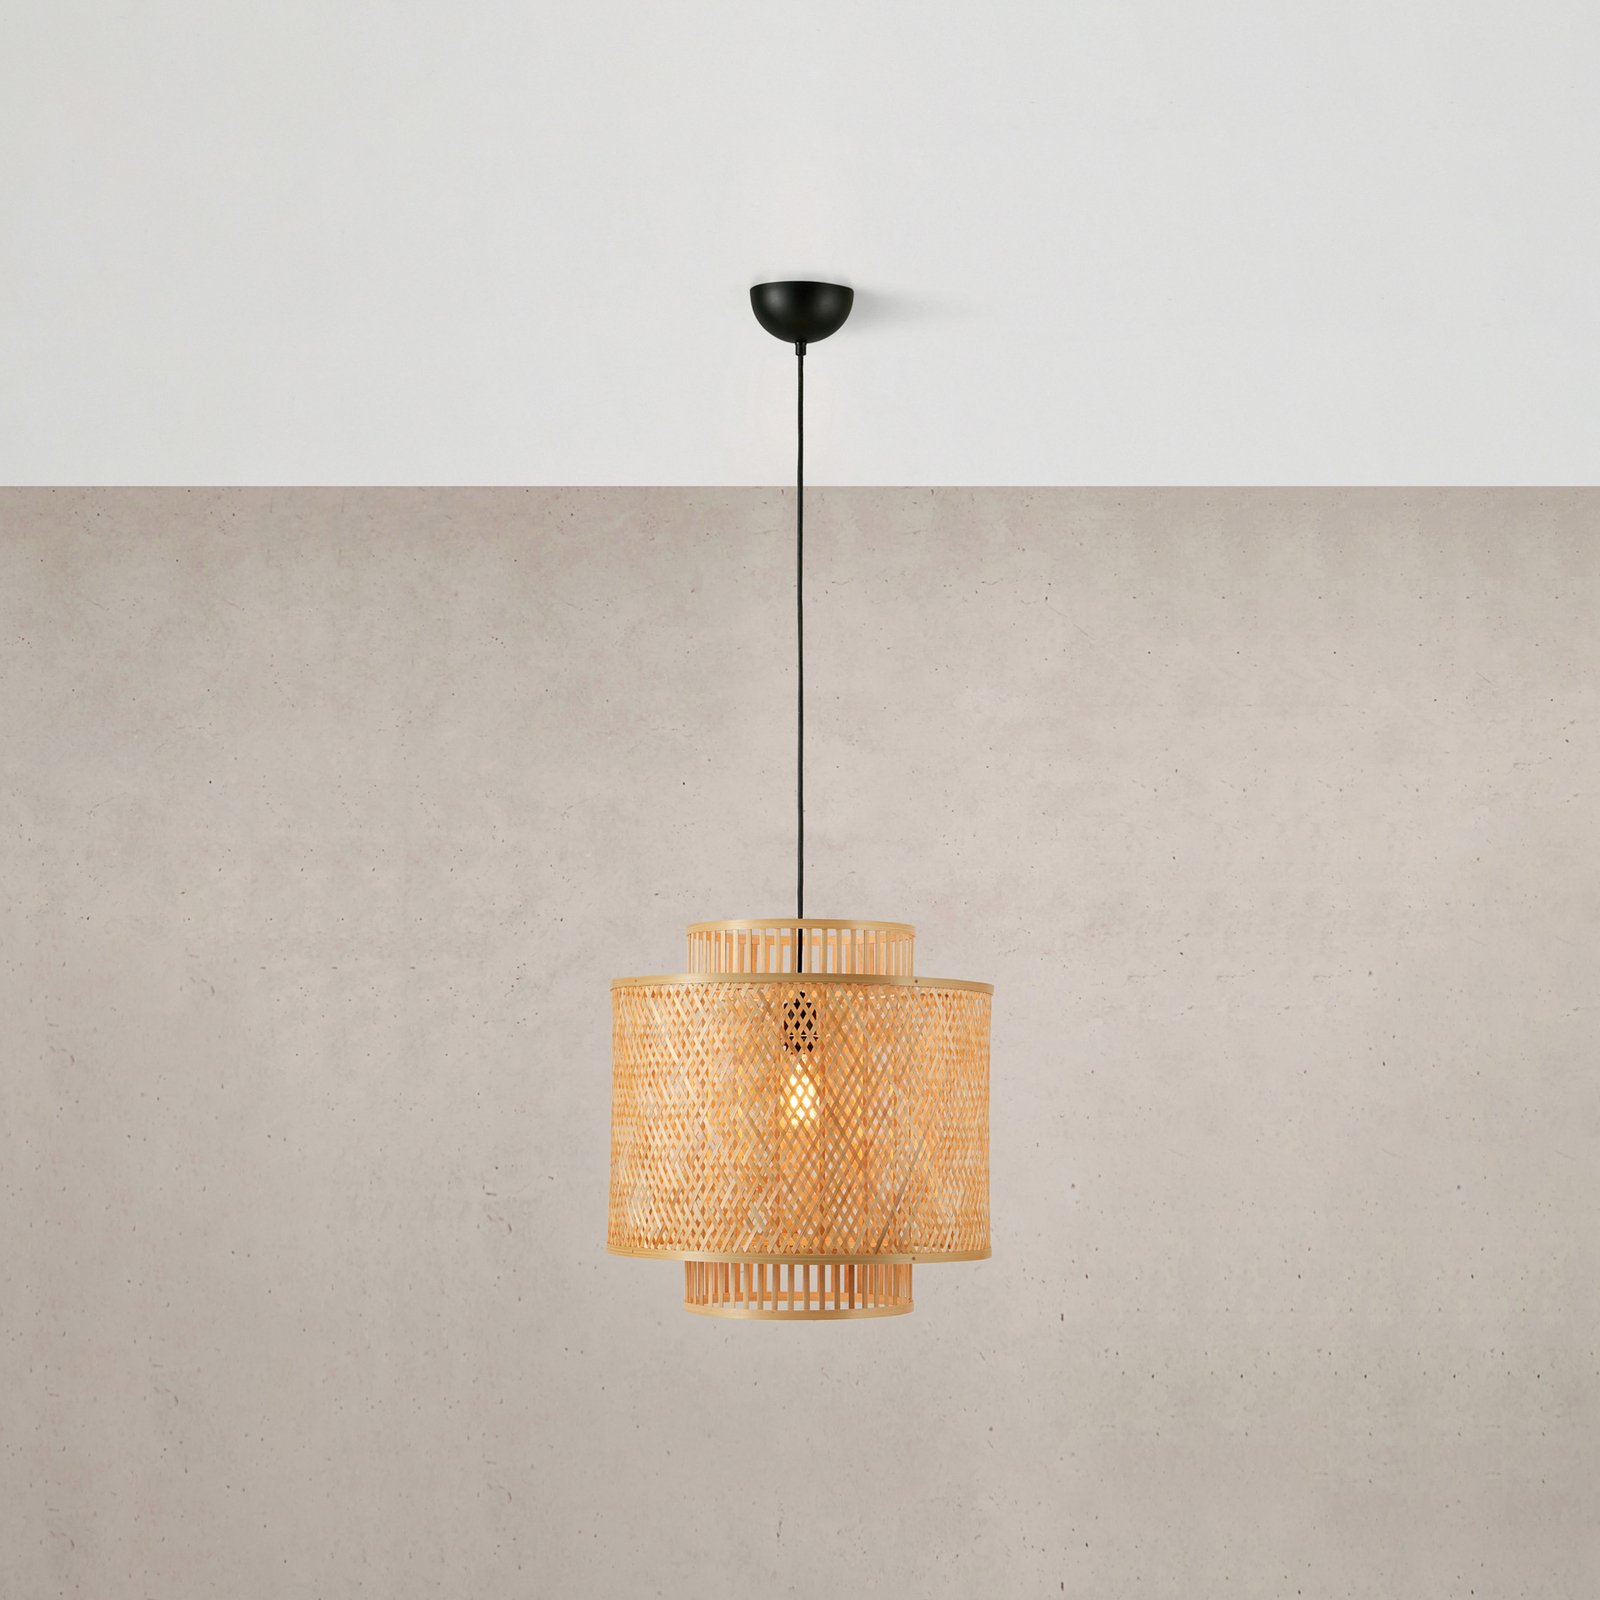 Strati pendant light made of bamboo, natural